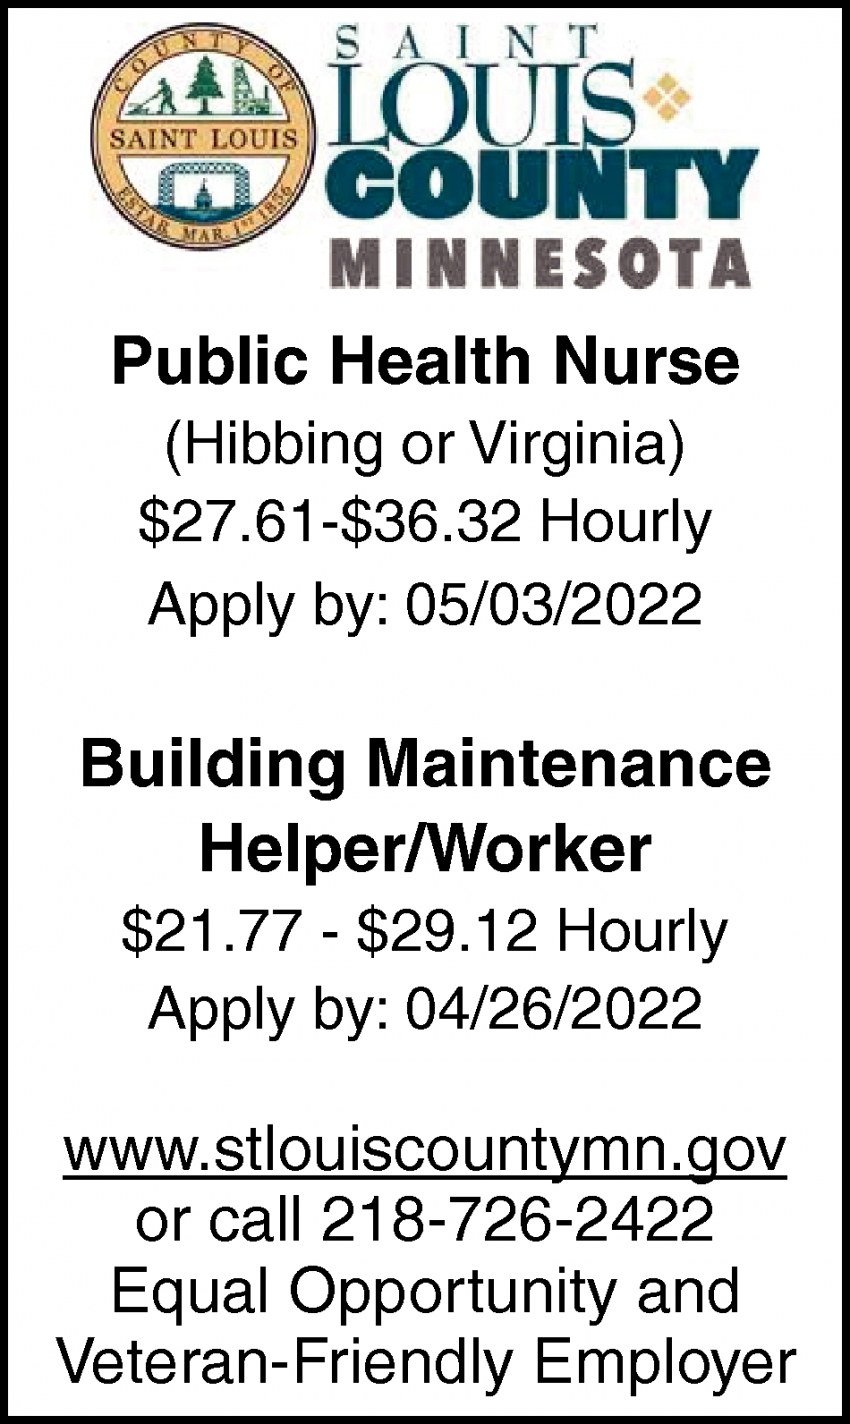 Public Health Nurse, Building Maintenance Helper/Worker